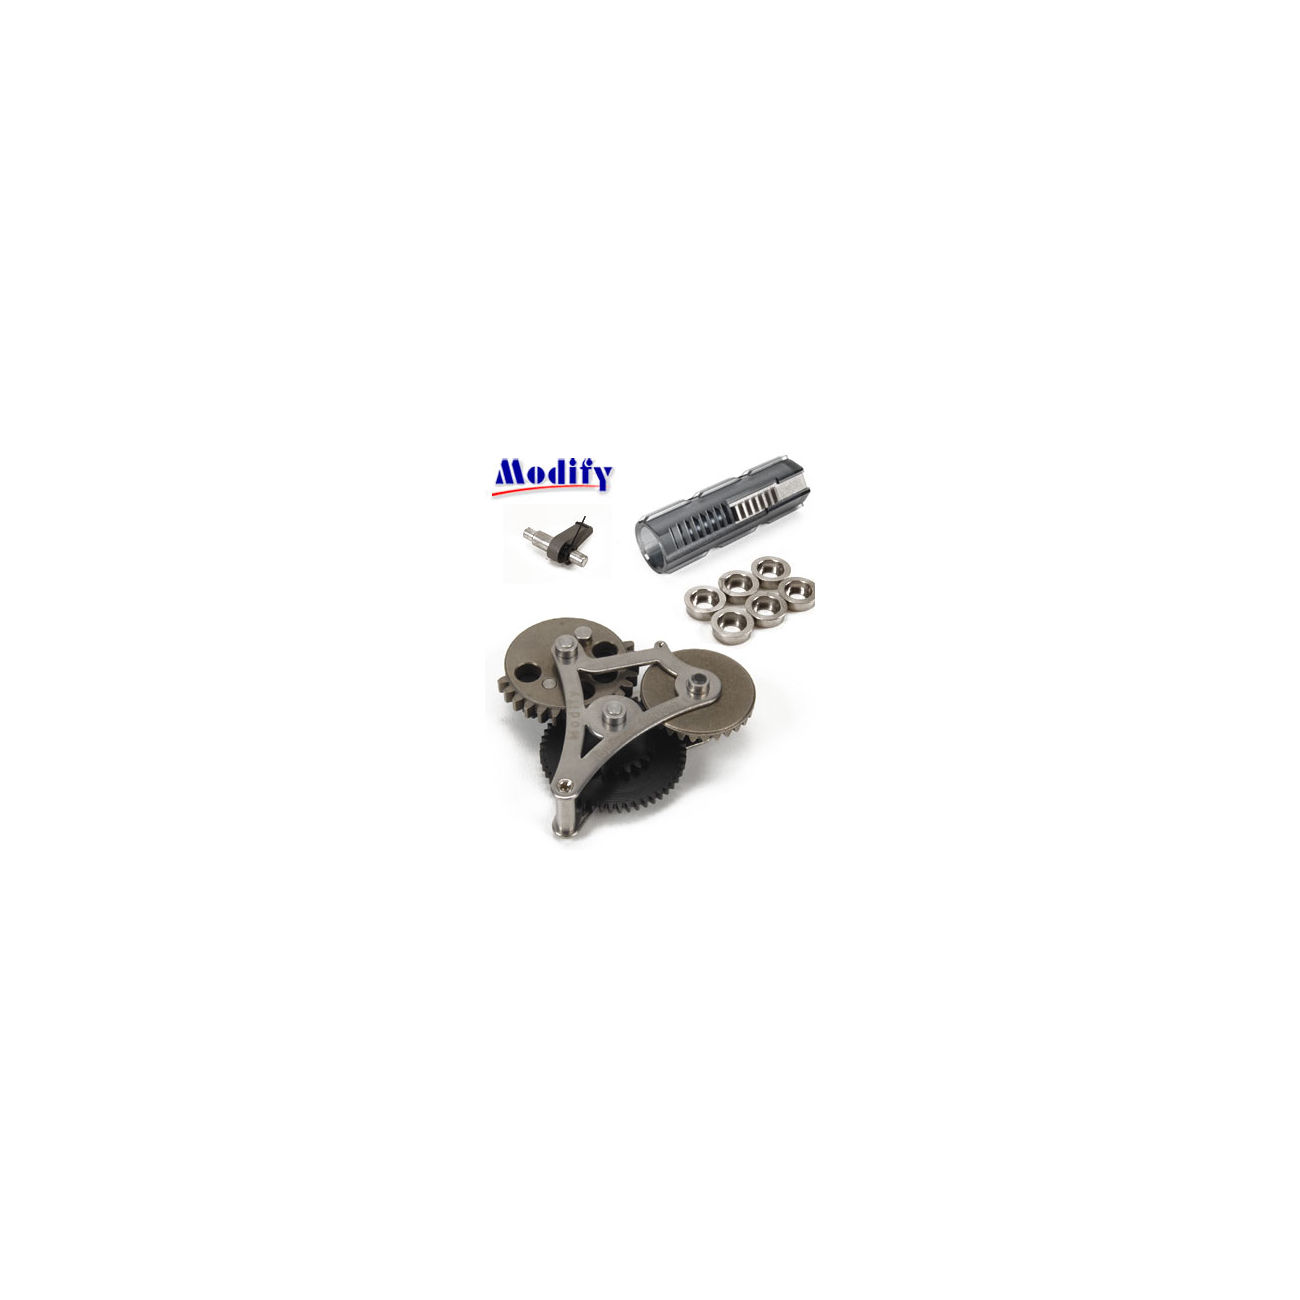 Modify Modular Gear Set 7.0mm - Top Torque